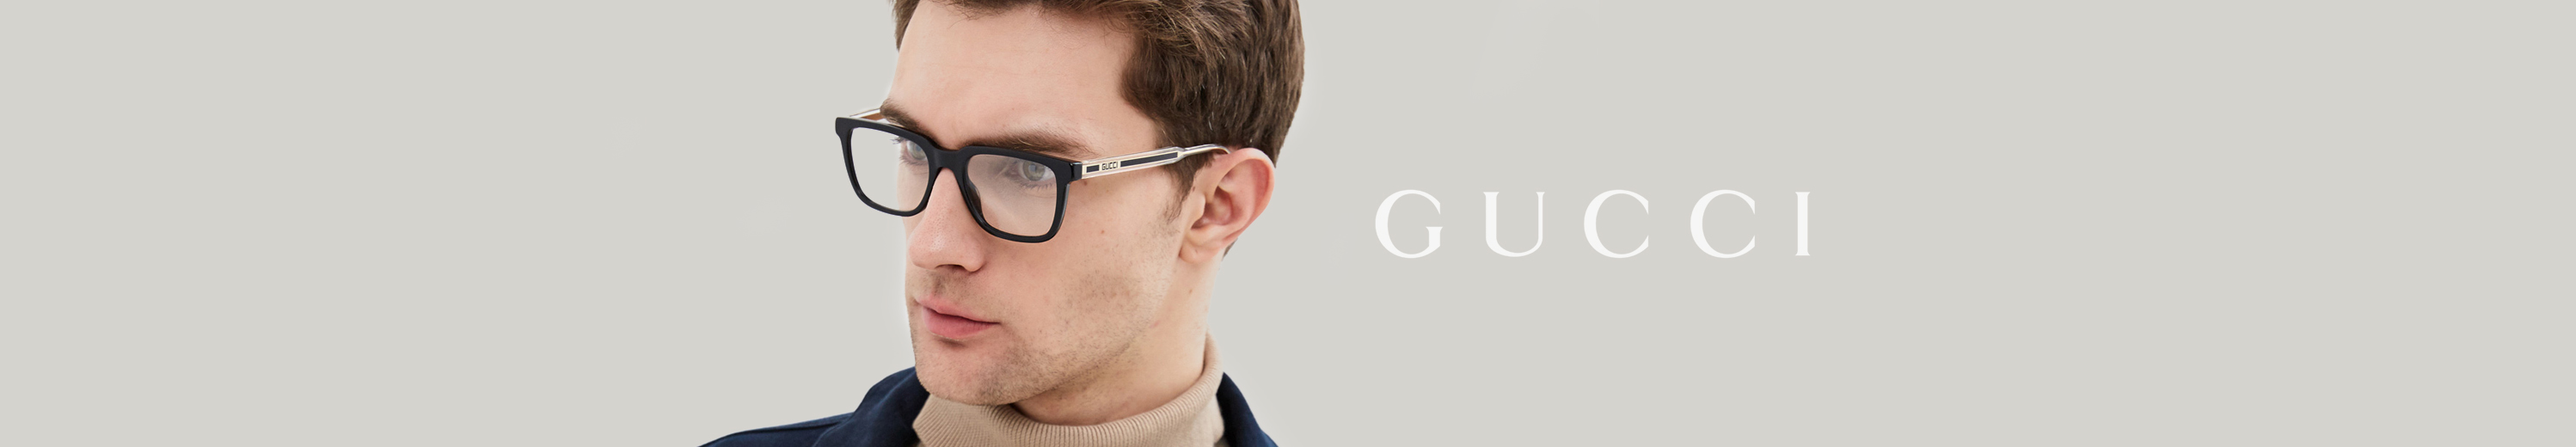 Gucci™ Men's Eyeglasses 